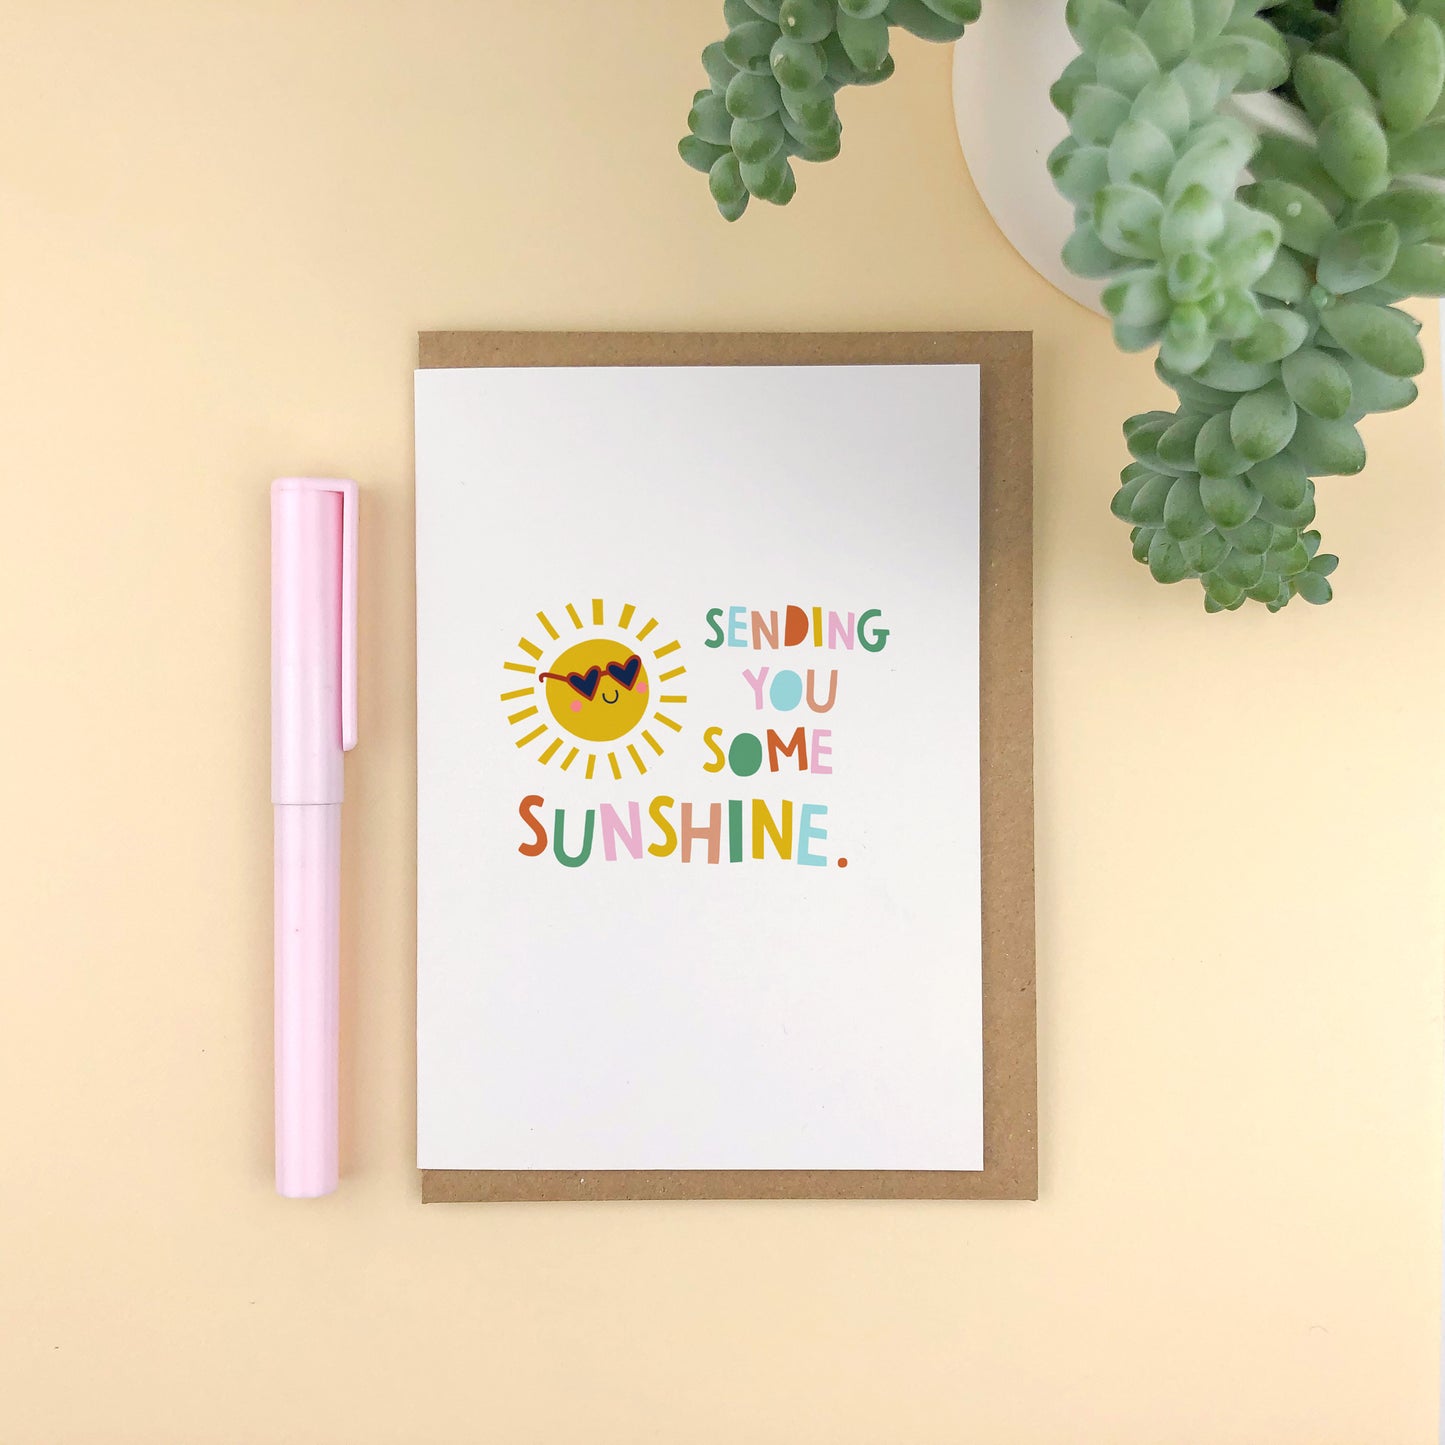 Sending You Some Sunshine. Encouragement Card